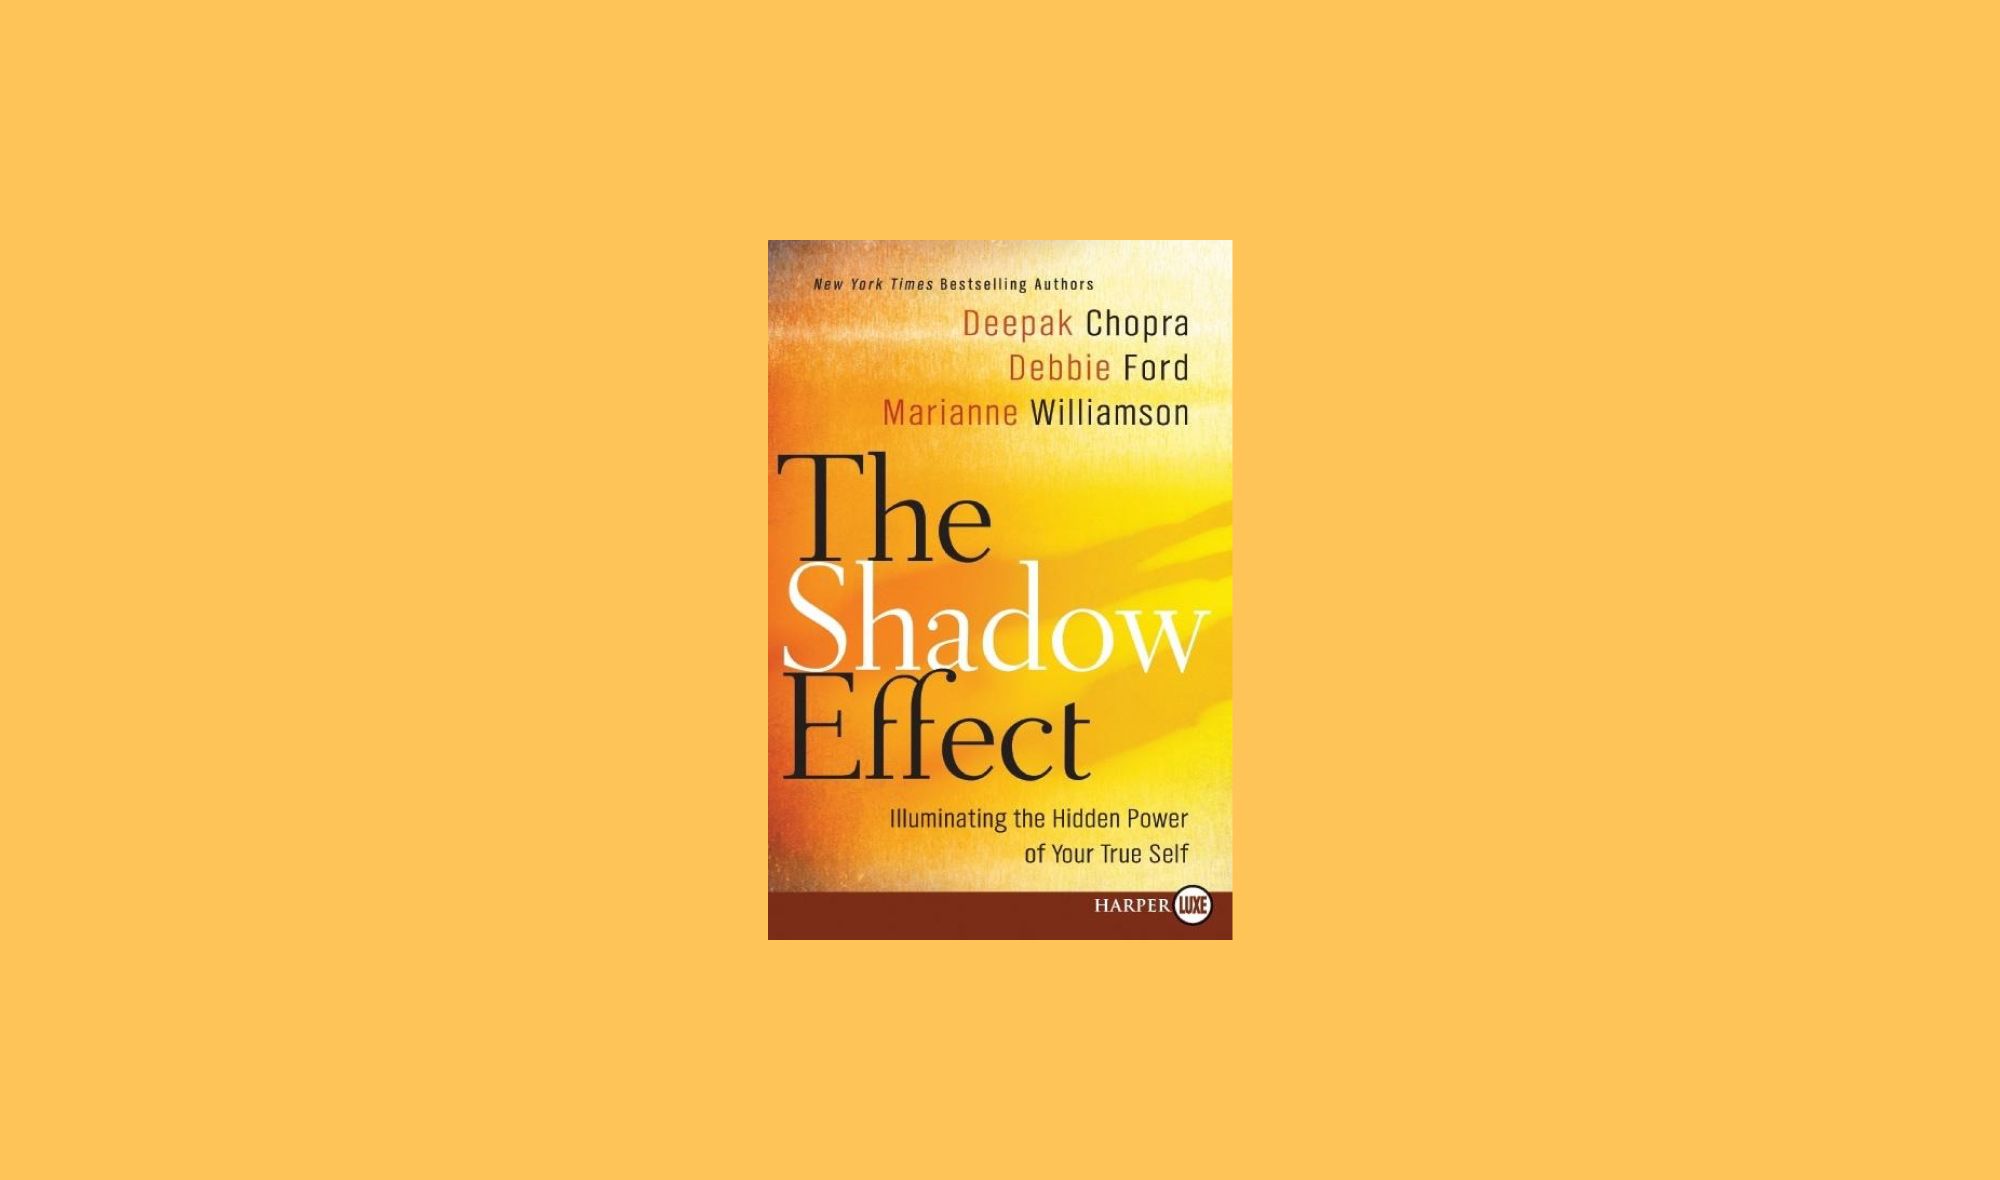 Shadow work books - "The Shadow Effect" by Deepak Chopra, Marianne Williamson, and Debbie Ford